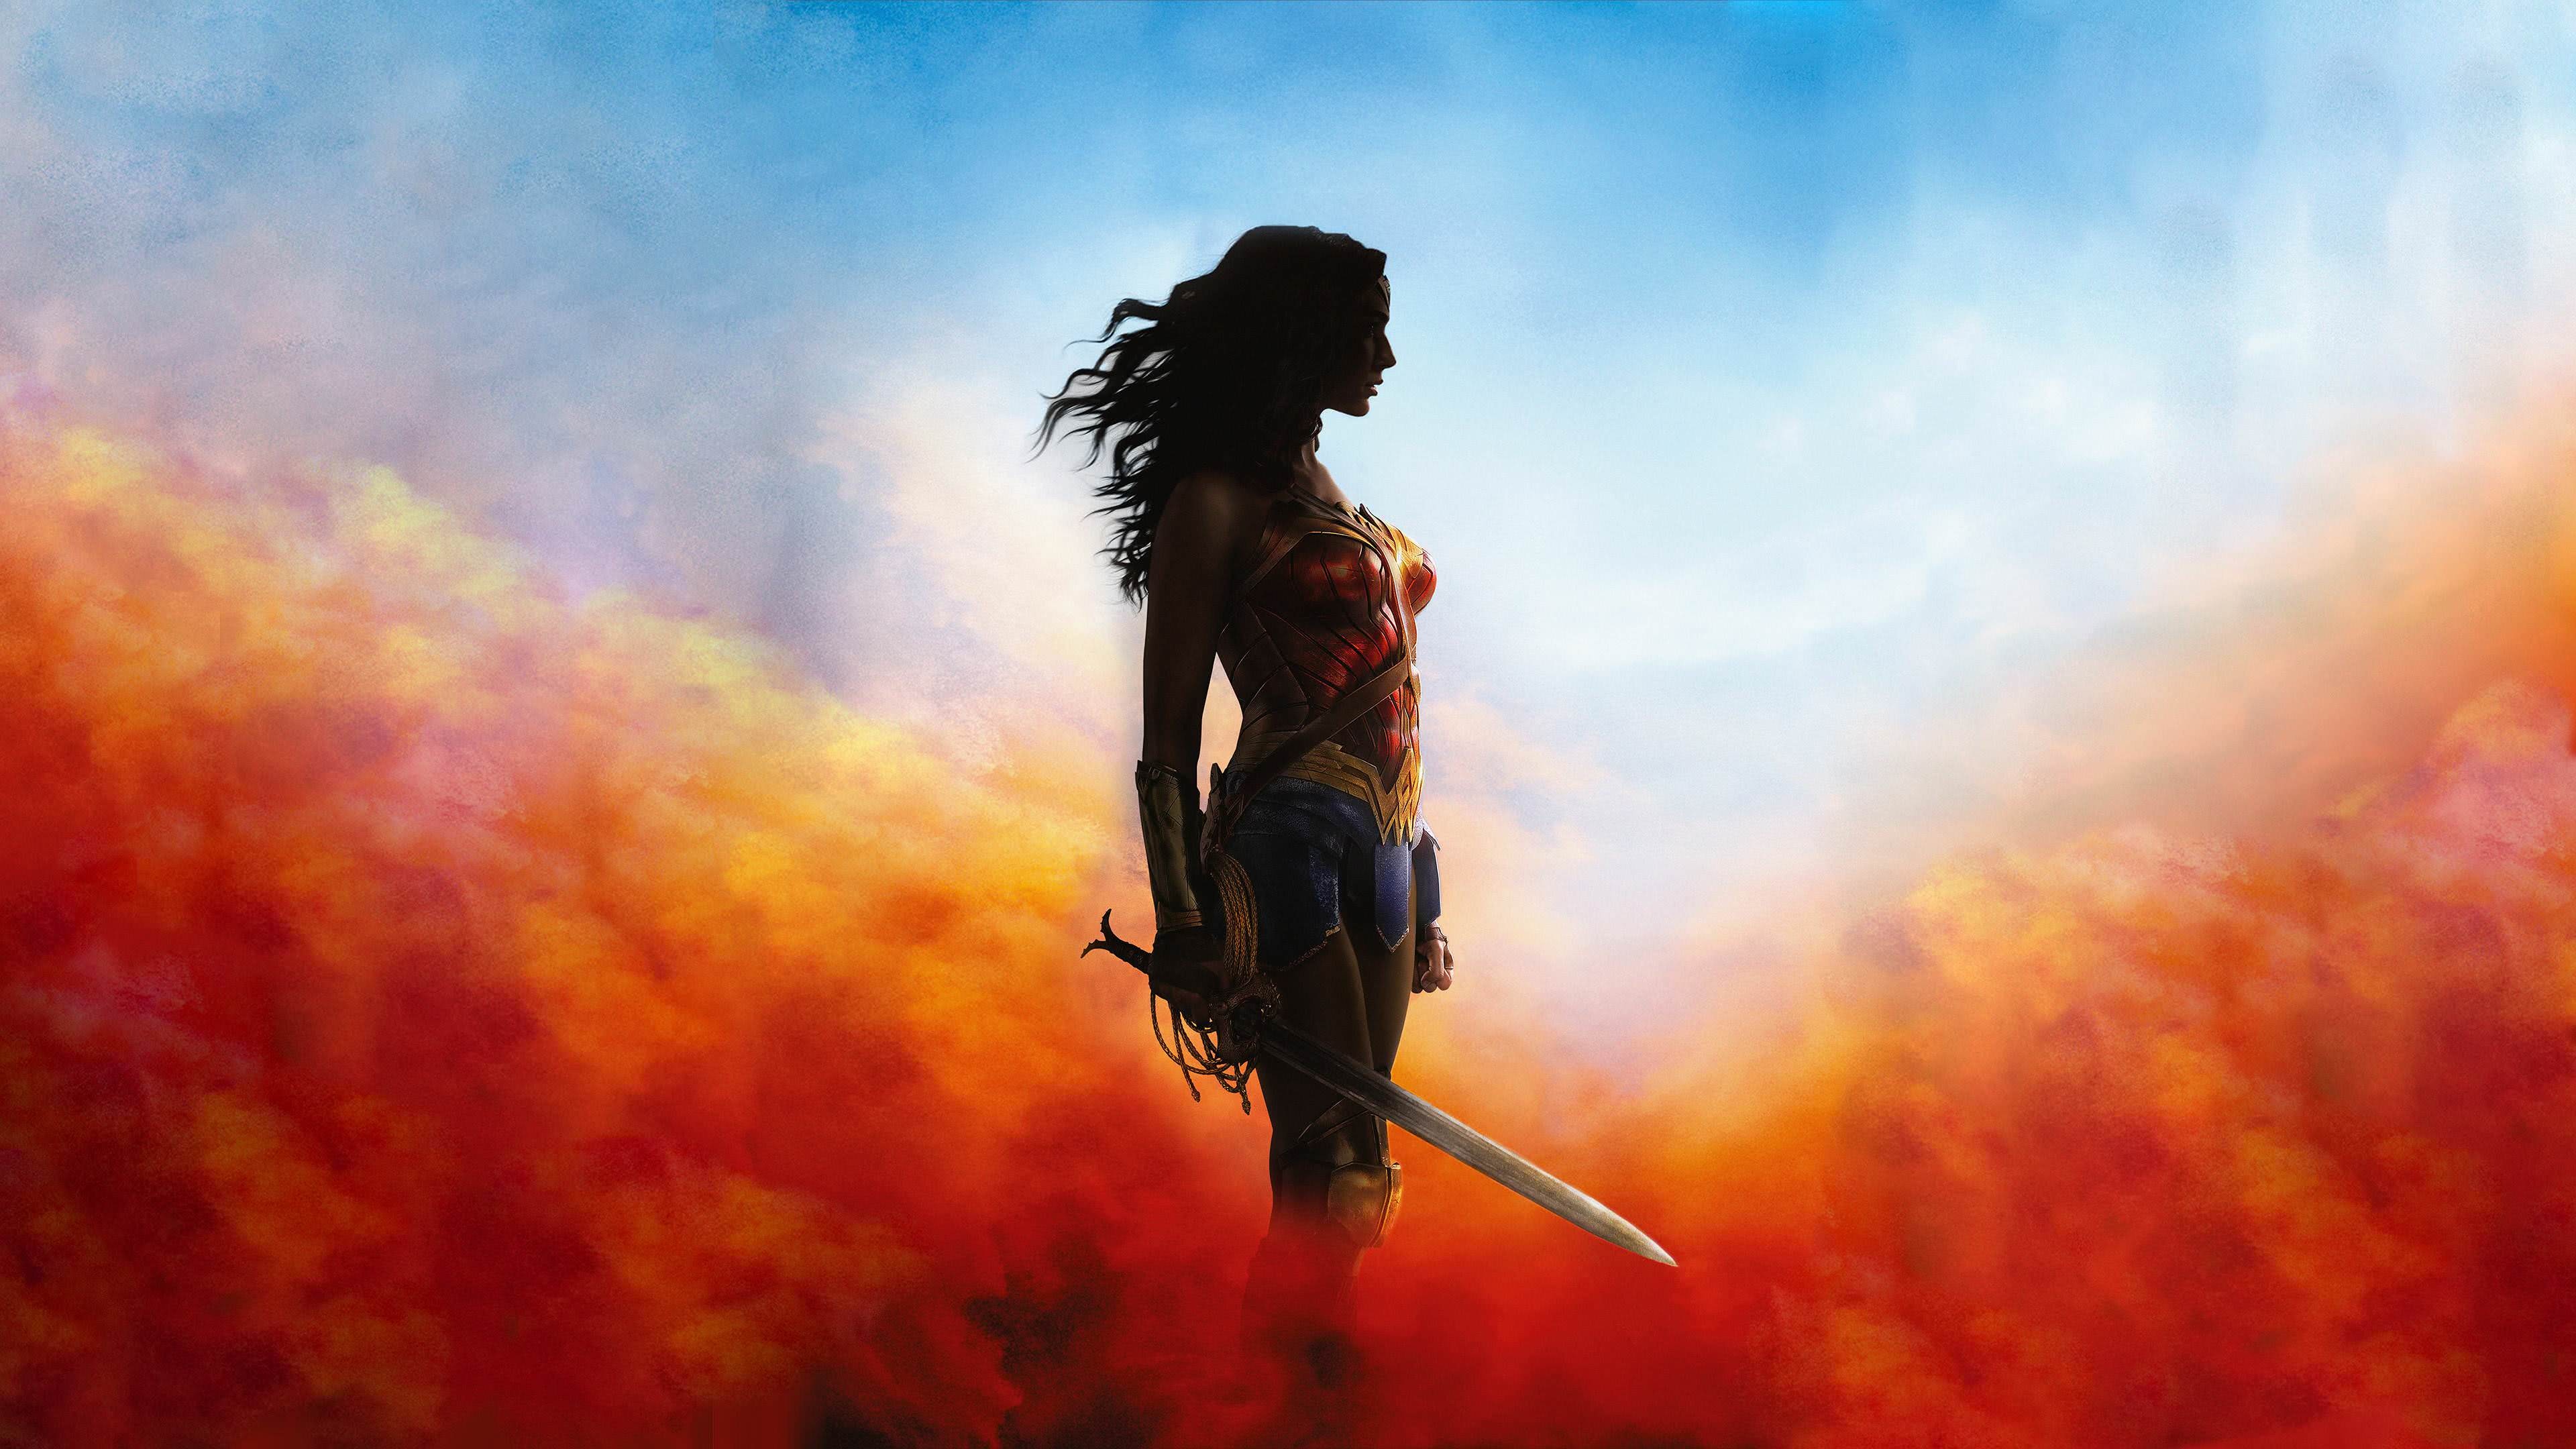 Wonder Woman movie, UHD 4K wallpaper, 3840x2160 4K Desktop